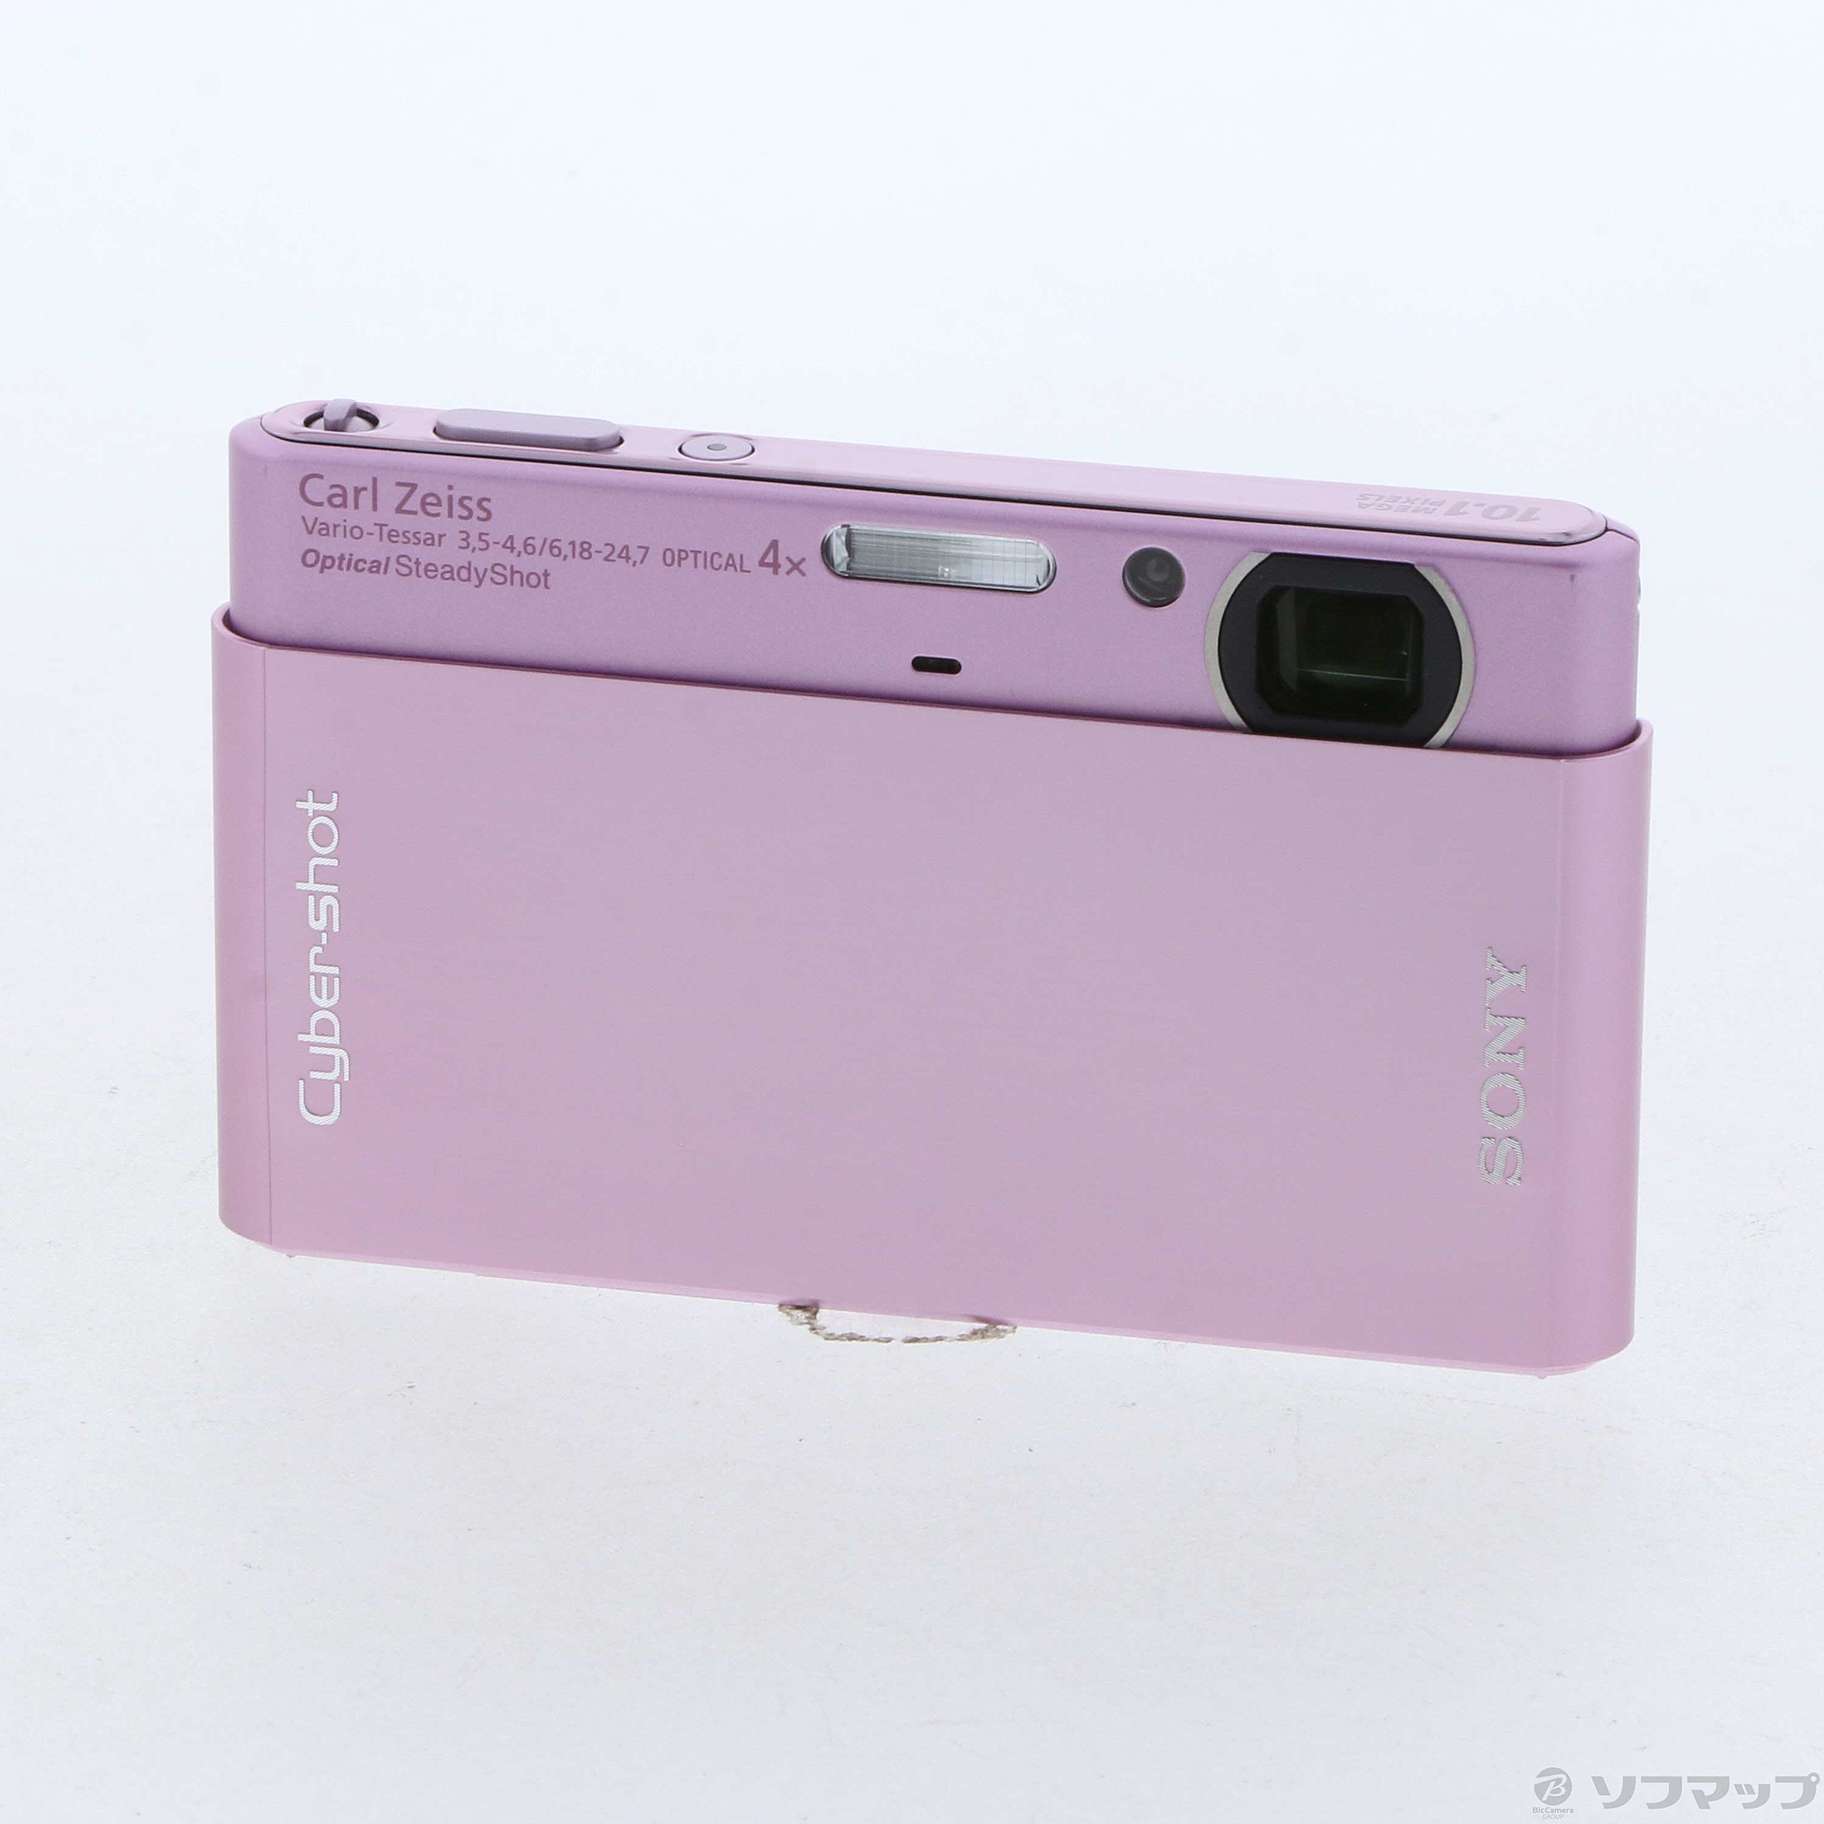 SONY Cyber-shot DSC-T77 - デジタルカメラ